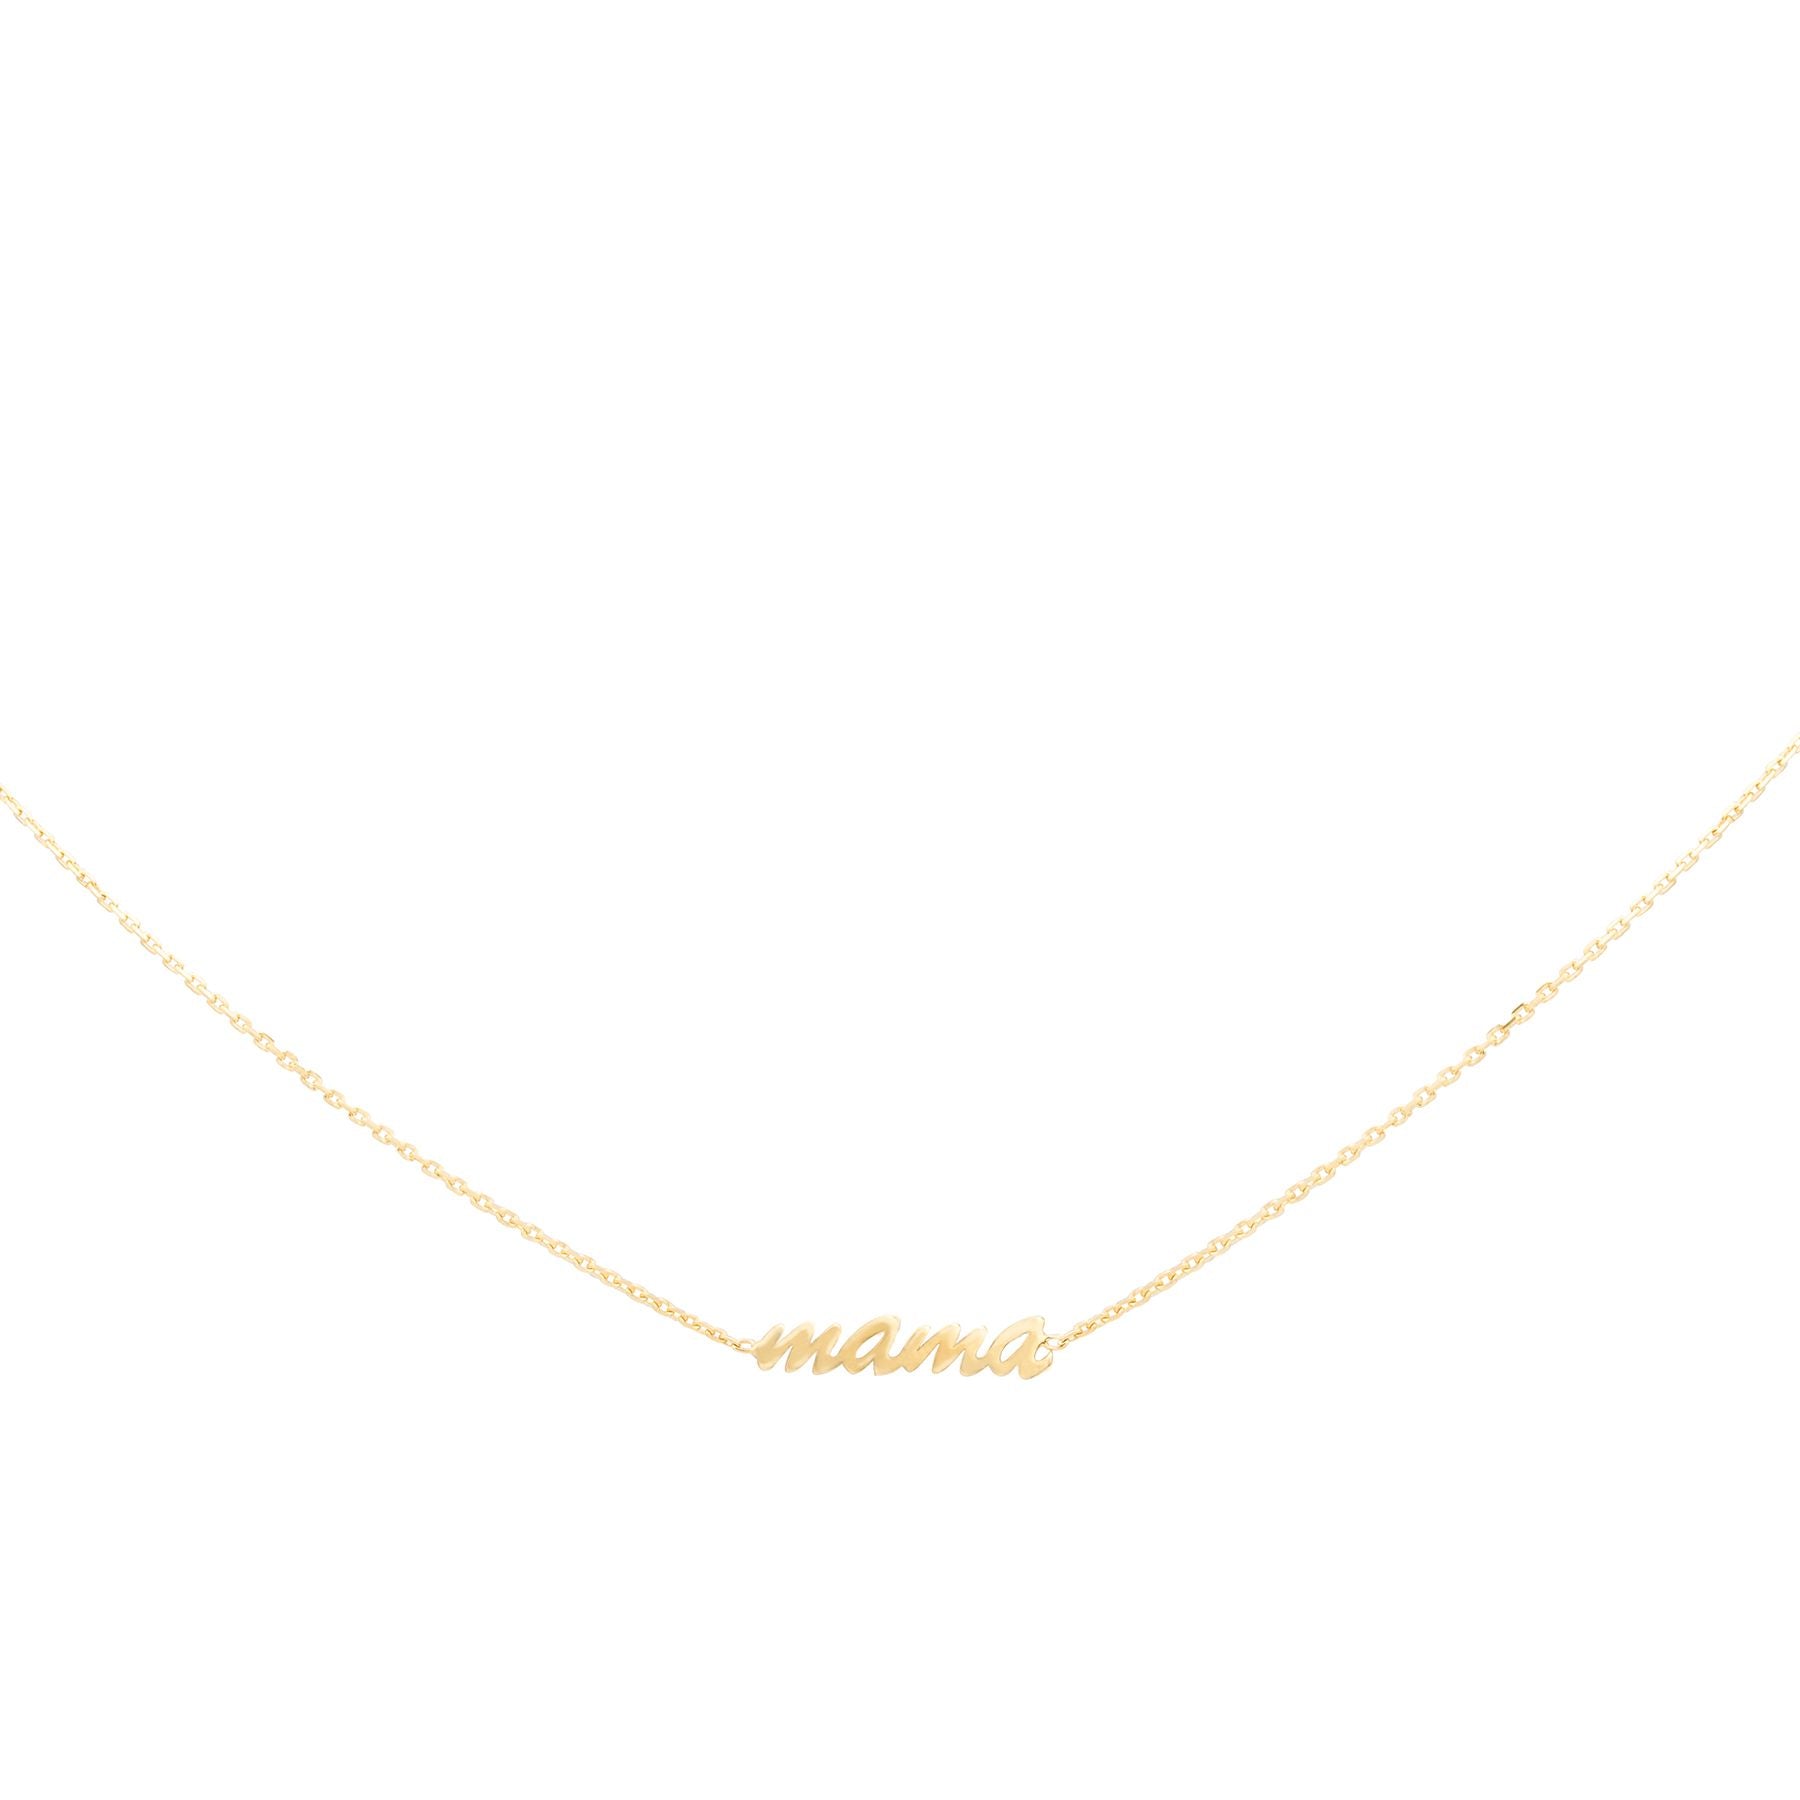 Tiny Plain Gold Adjustable Mama Necklace - Nina Segal Jewelry